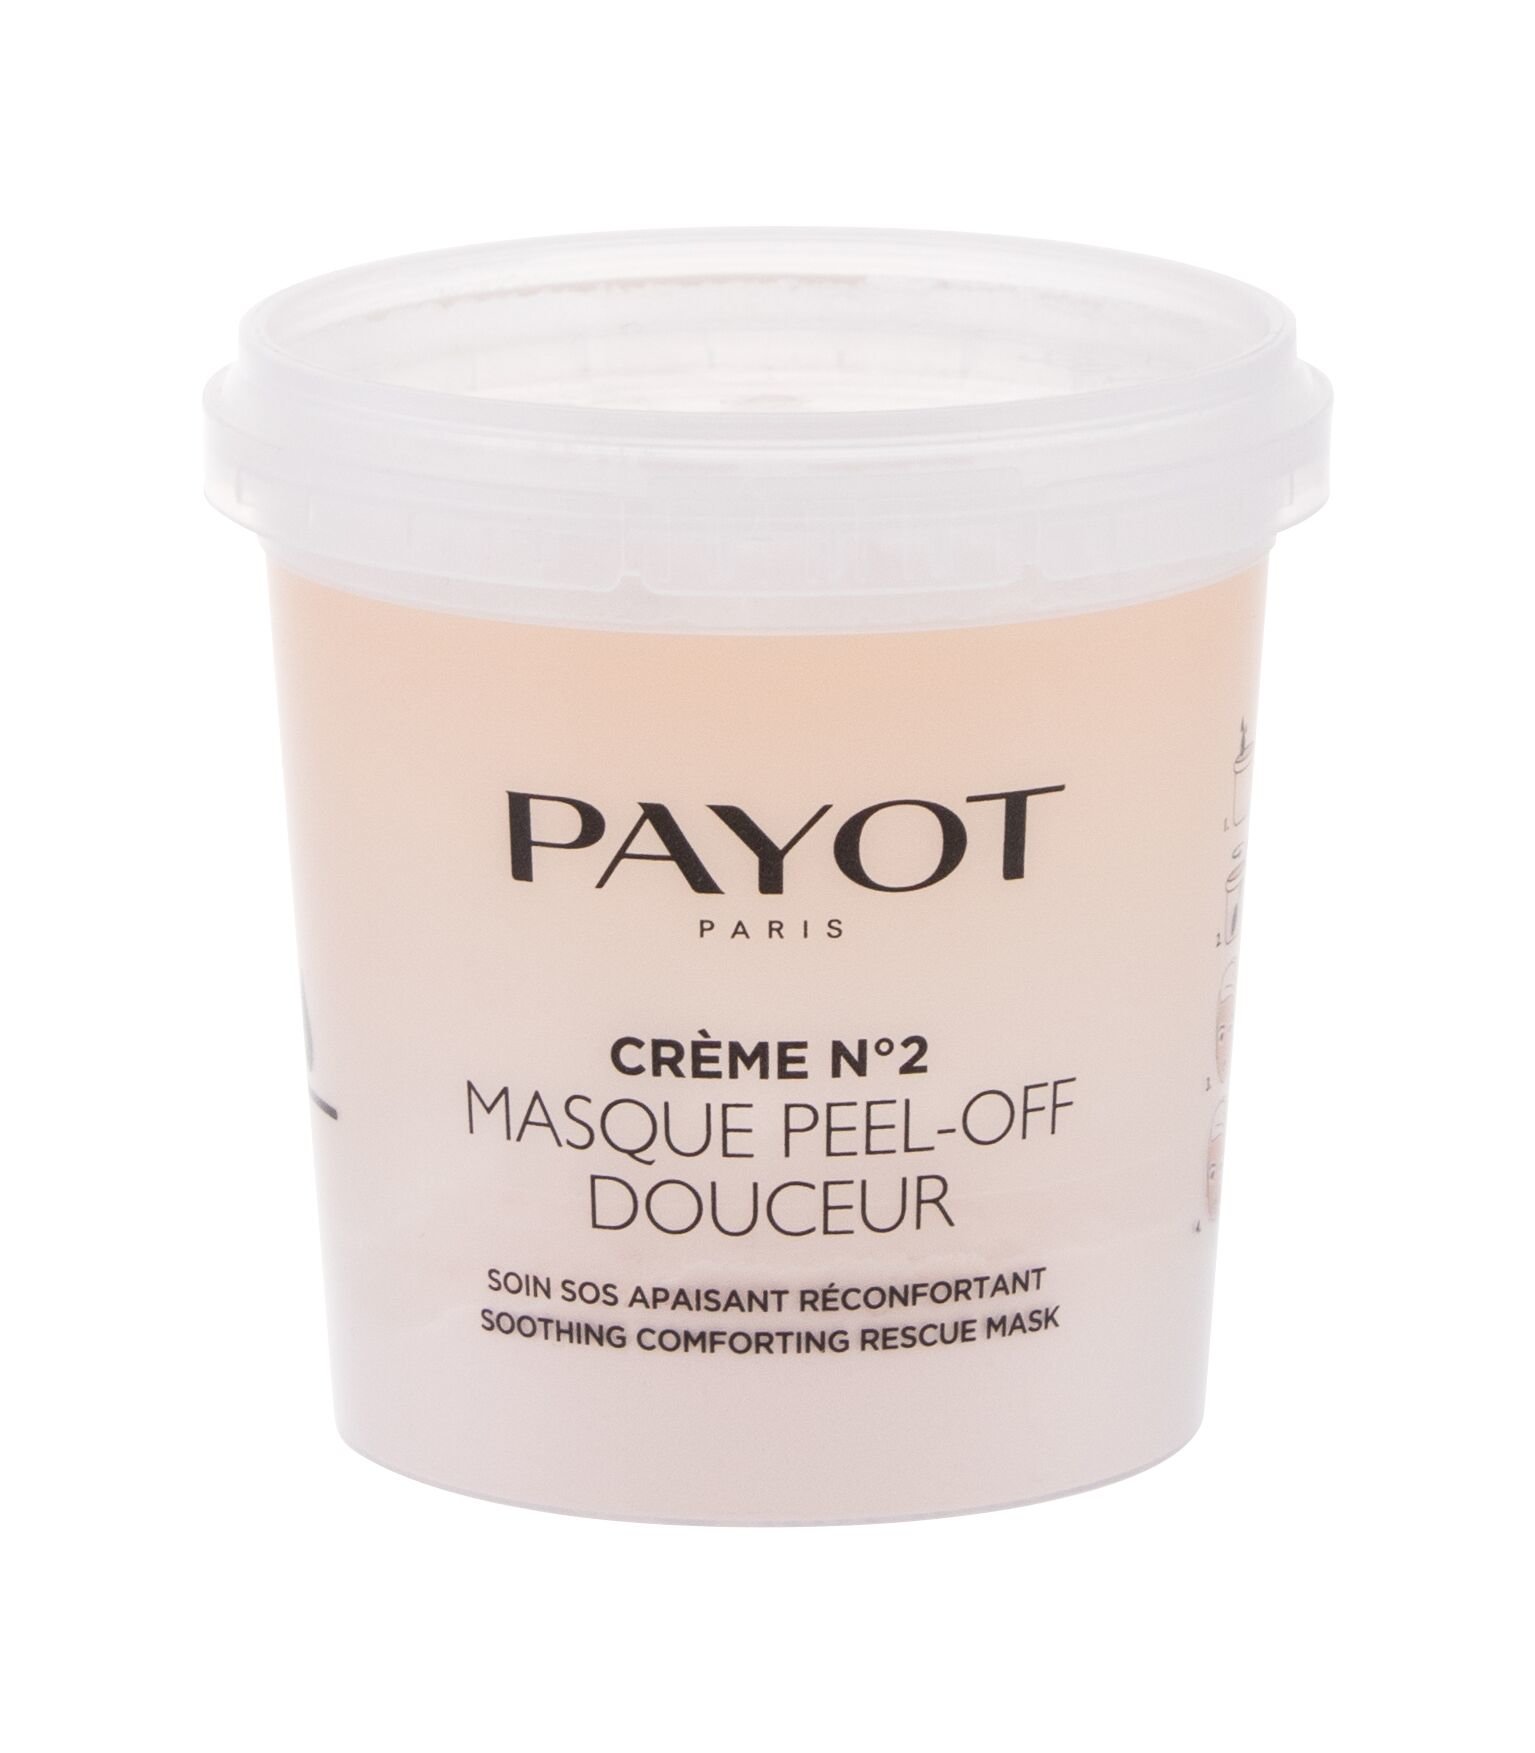 Payot Creme No2 Soothing Comforting Rescue Mask Veido kaukė